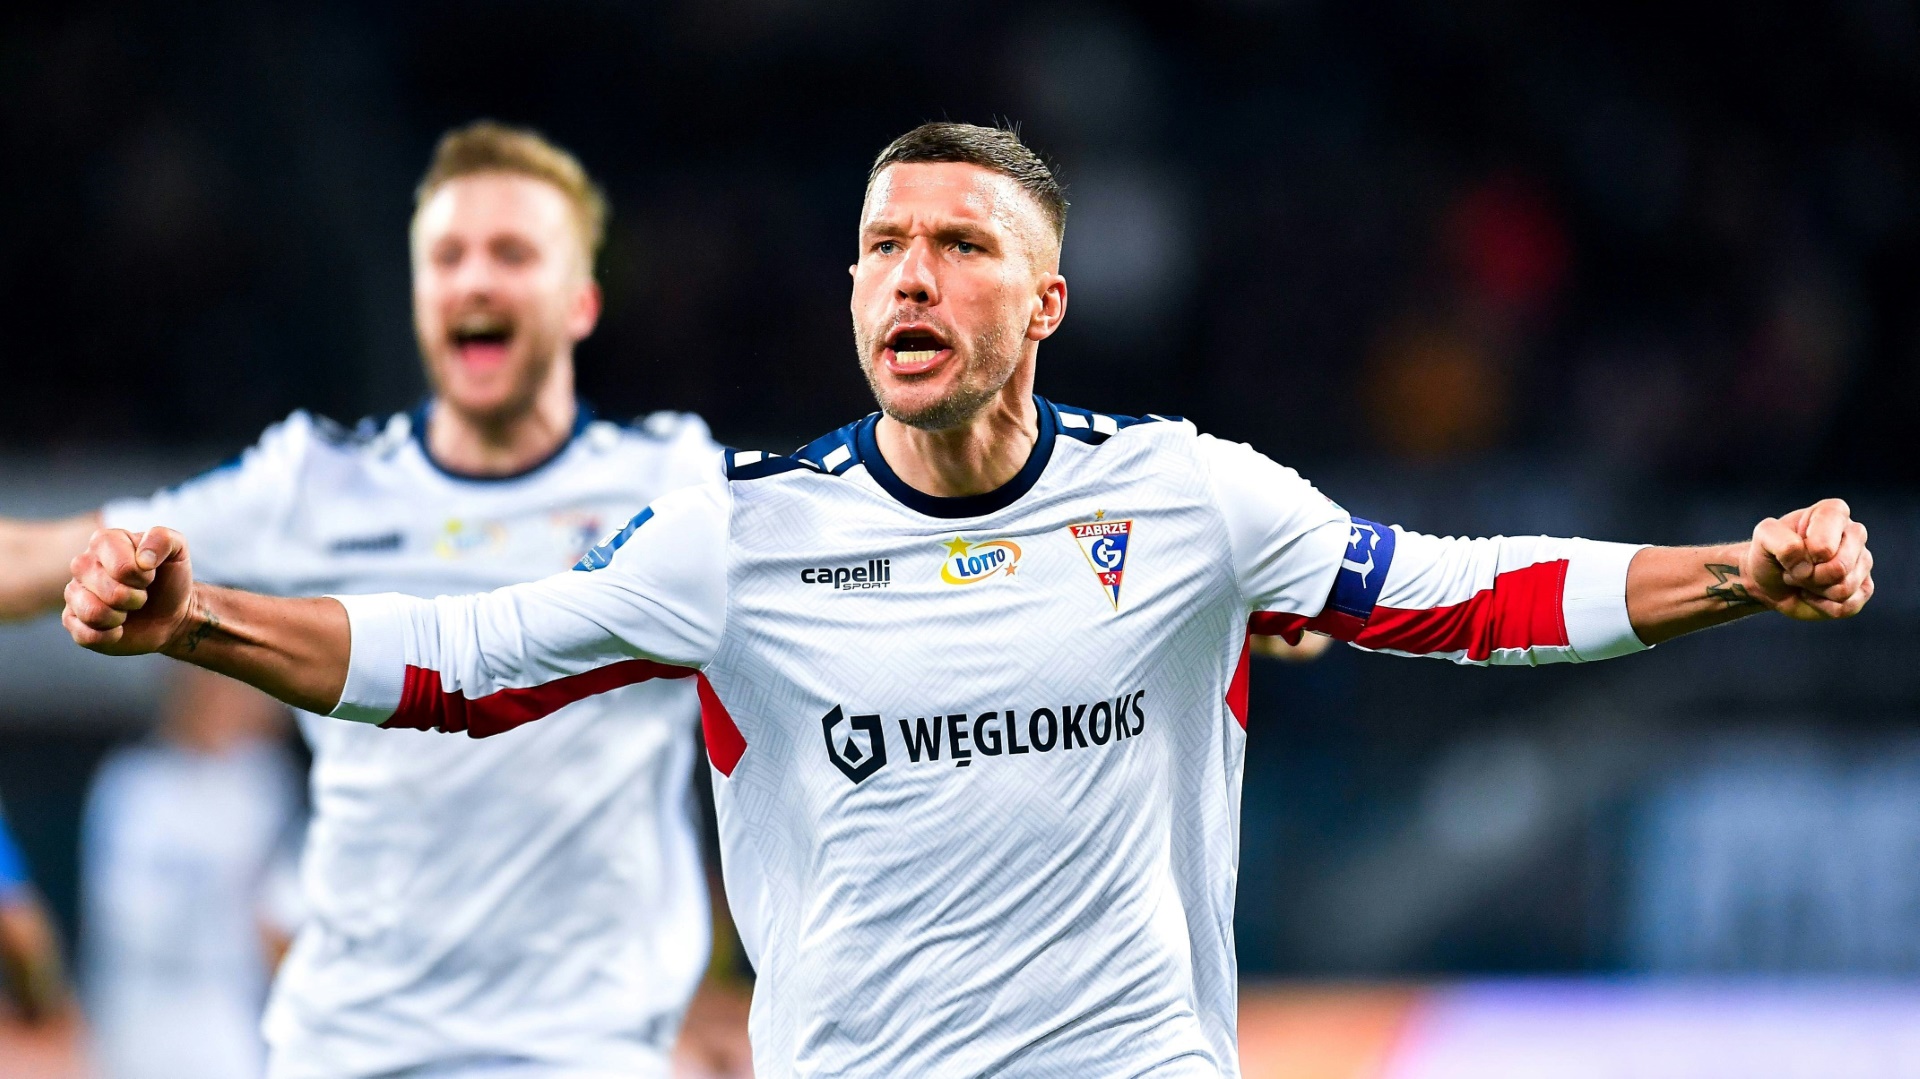 Lukas Podolski traf fulminant in den Winkel